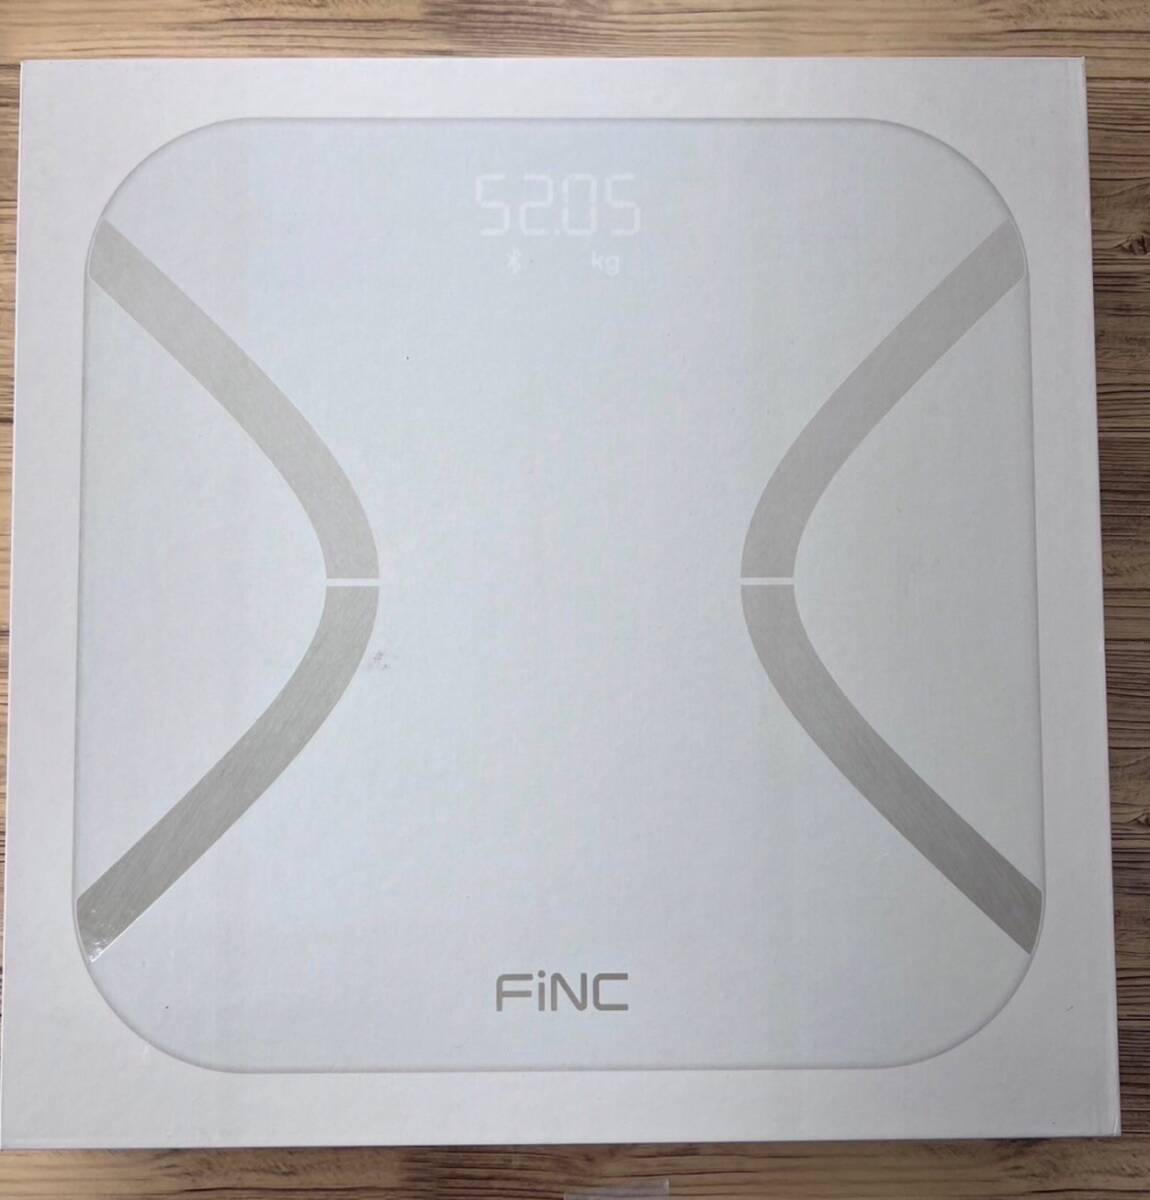  body composition meter FinC CS20E-mini white 